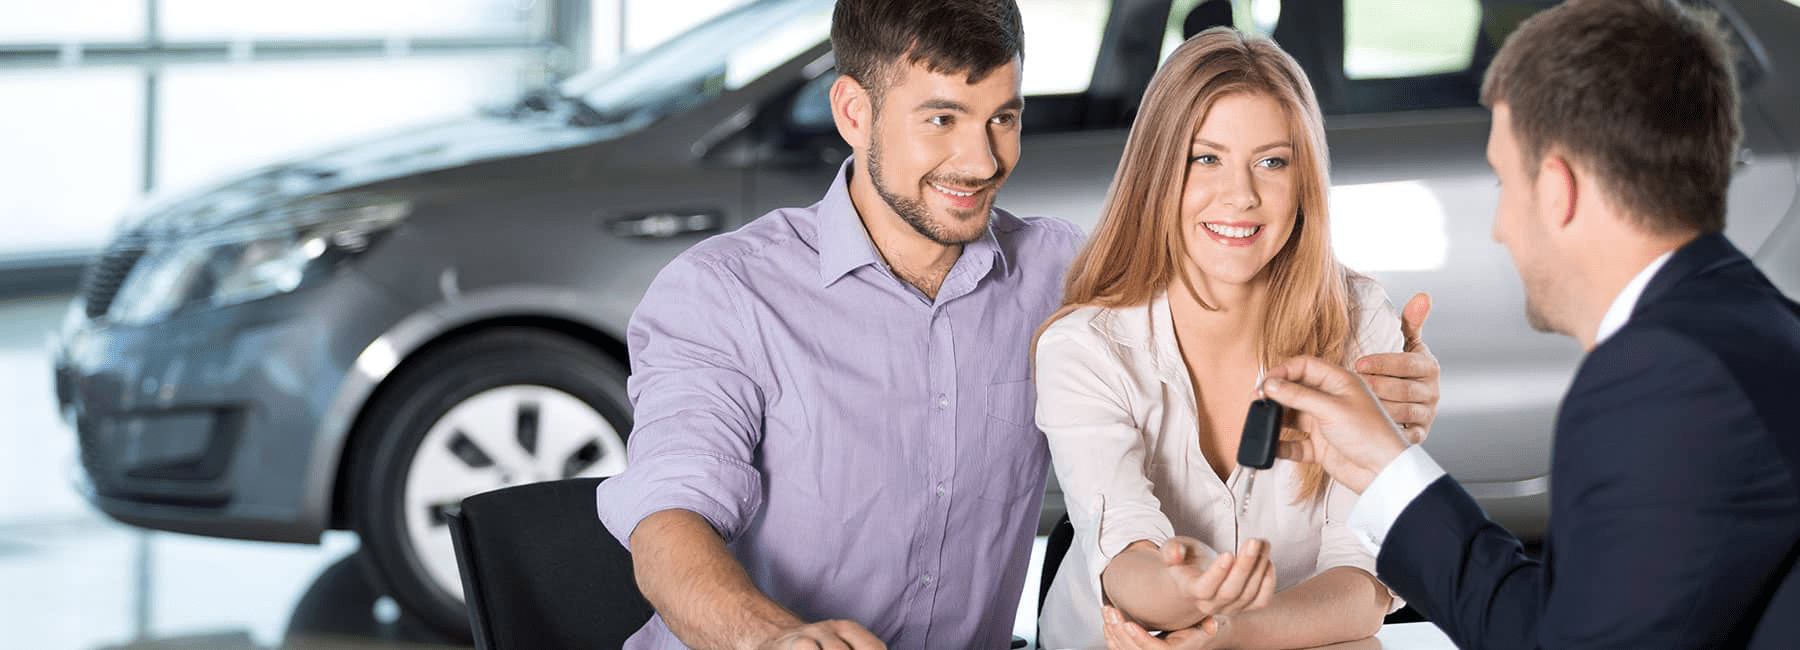 dealer hands new car keys to happy couple